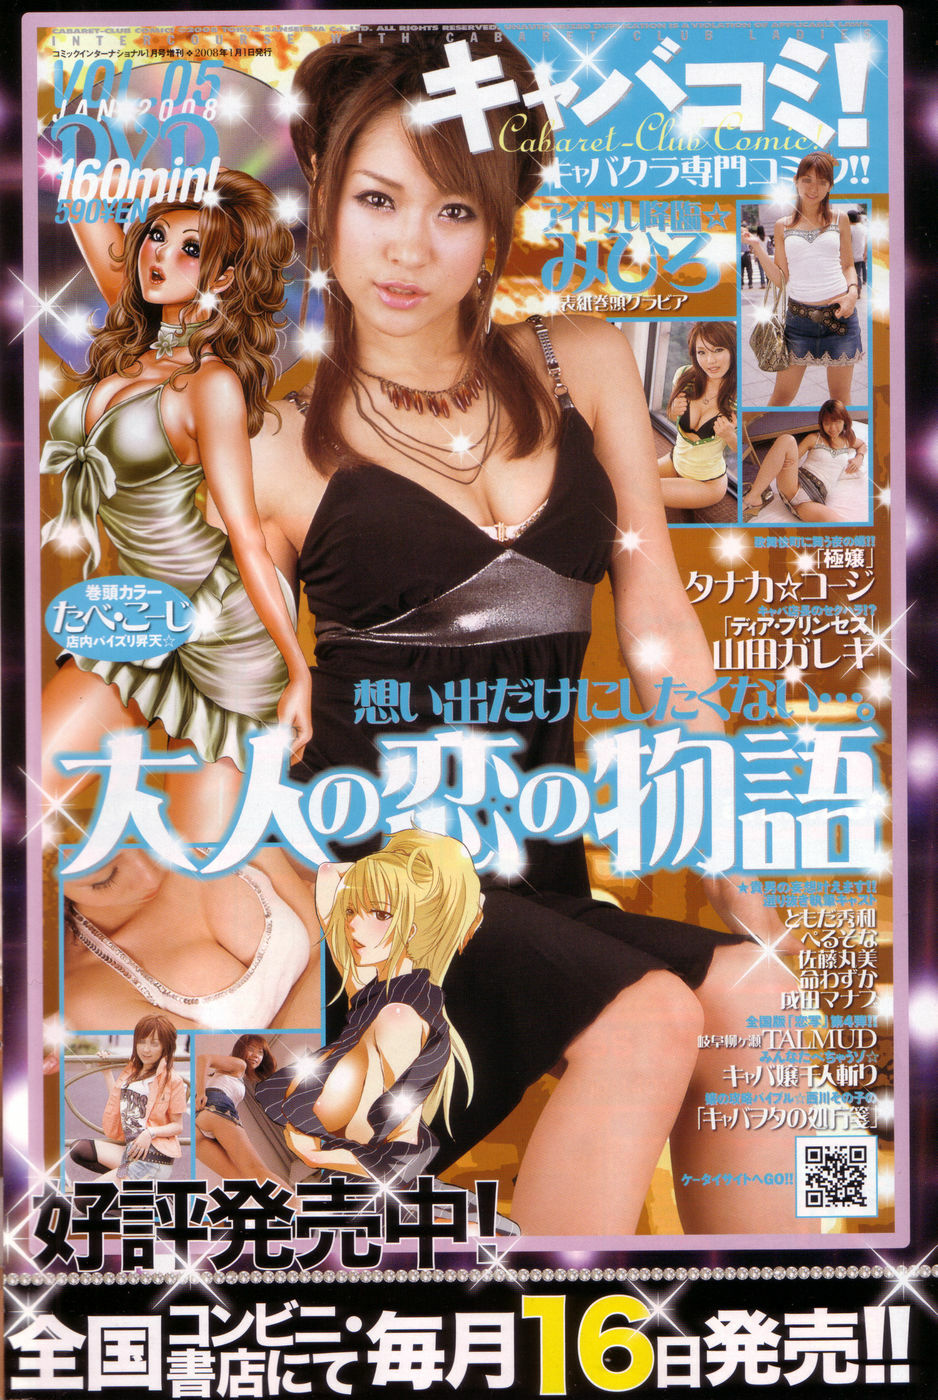 [H-Magazine] Chobekomi Vol.14 Jan. 2008 (Tsukitaki) page 3 full